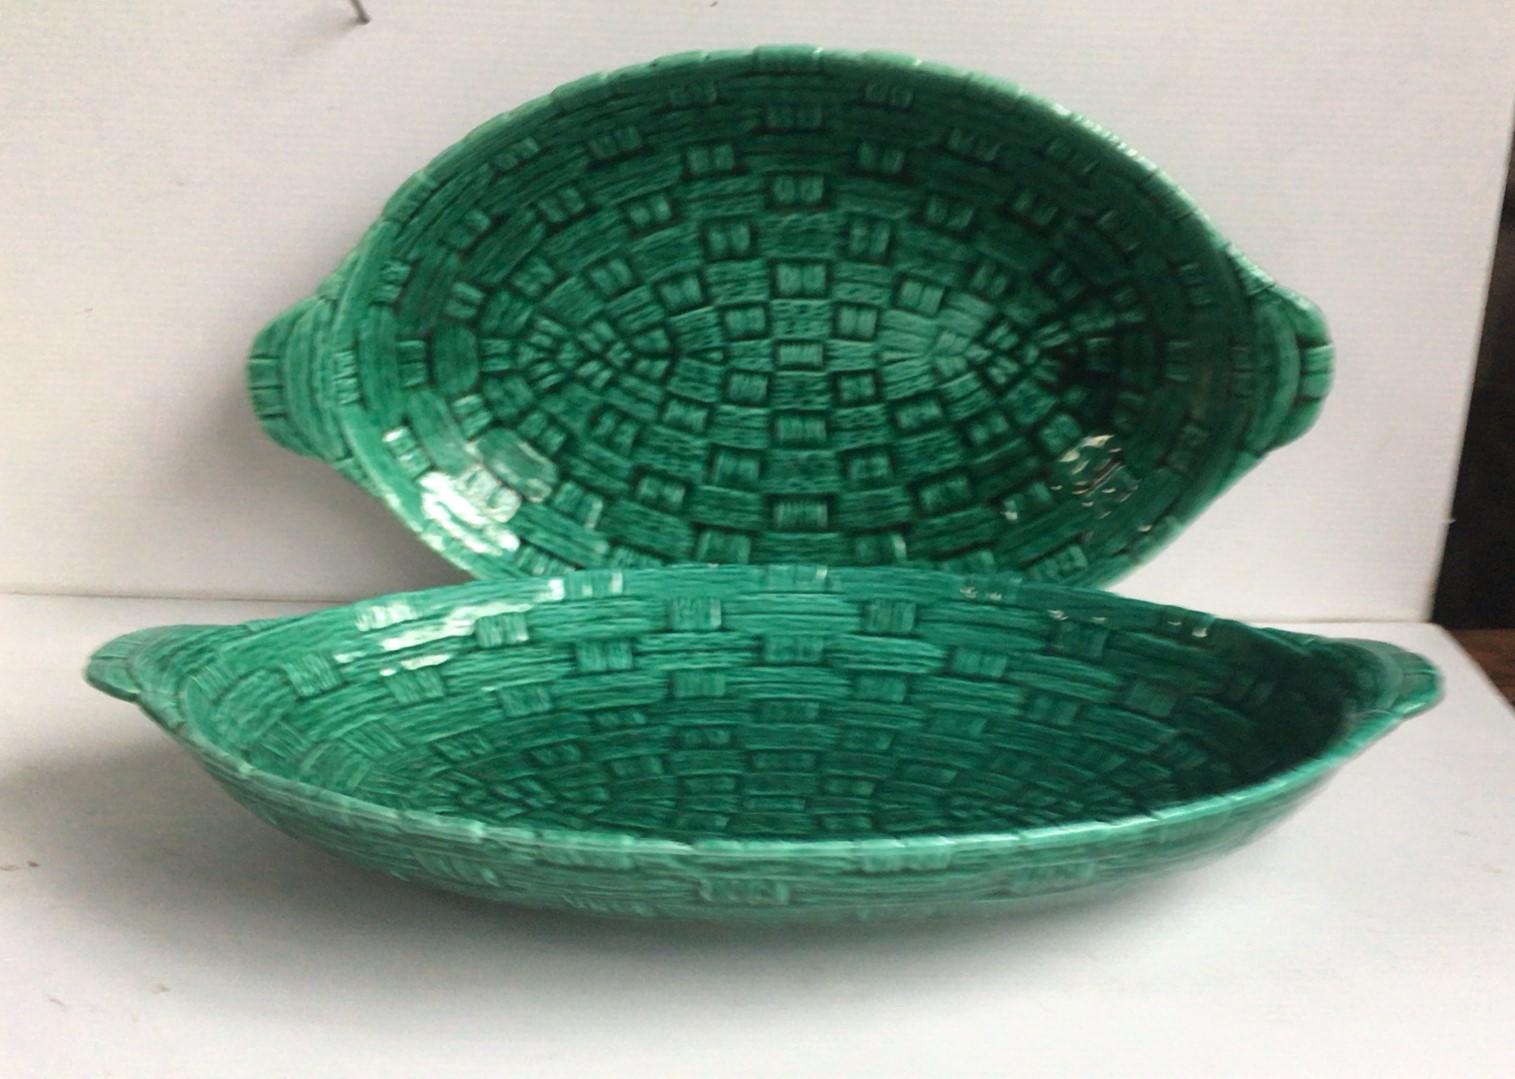 Green Majolica platter Sarreguemines Digoin, circa 1920.
Basket weave trompe l'oeil.